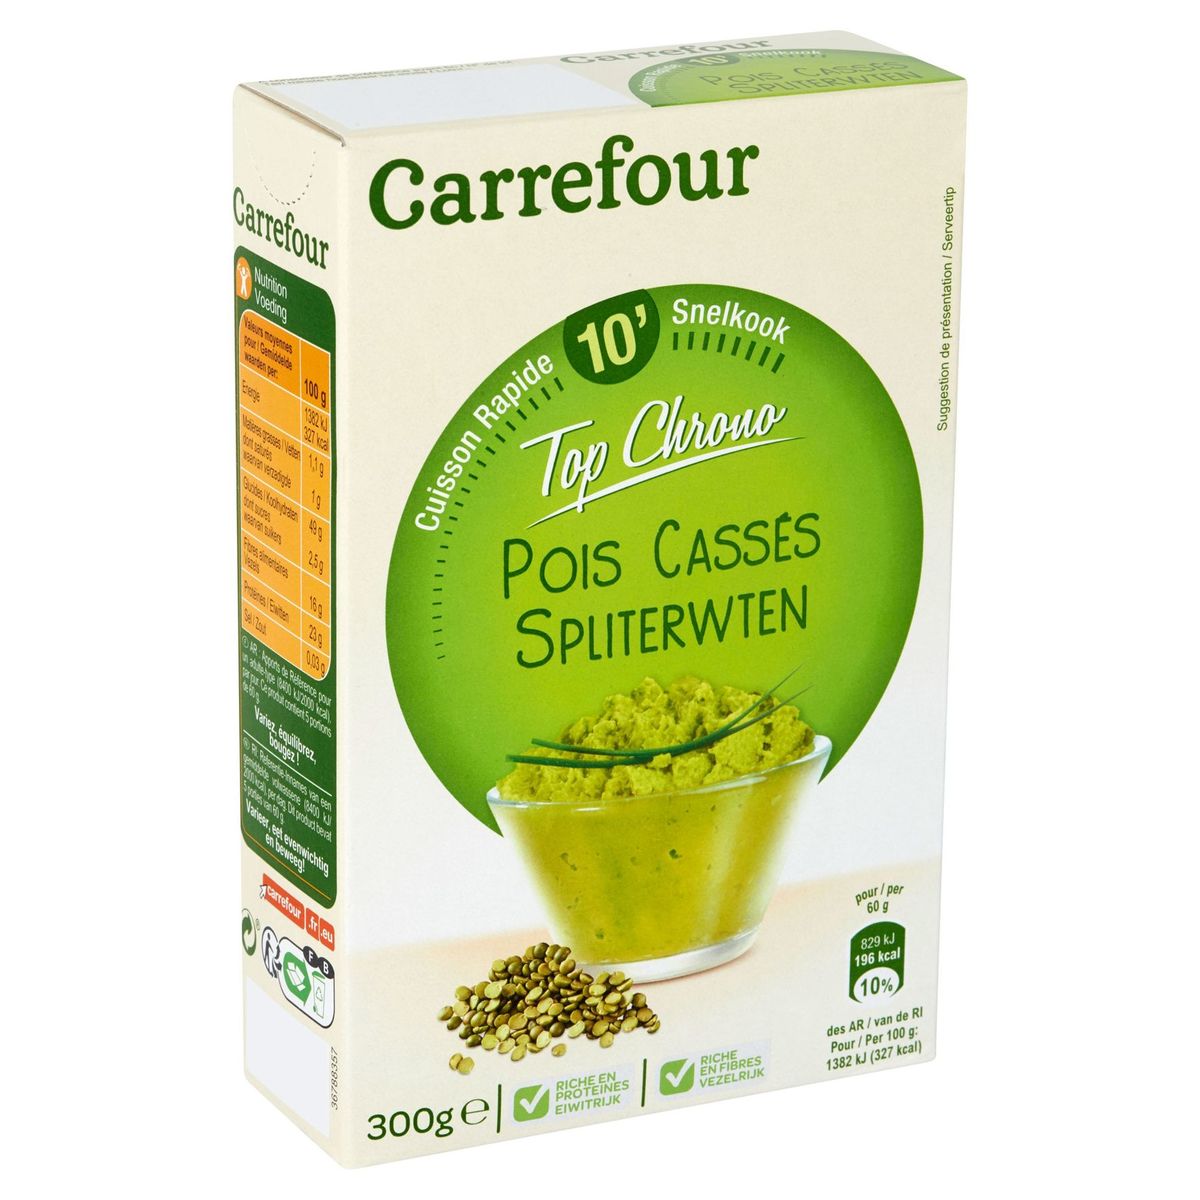 Carrefour Cuisson Rapide 10' Top Chrono Pois Casses 300 g